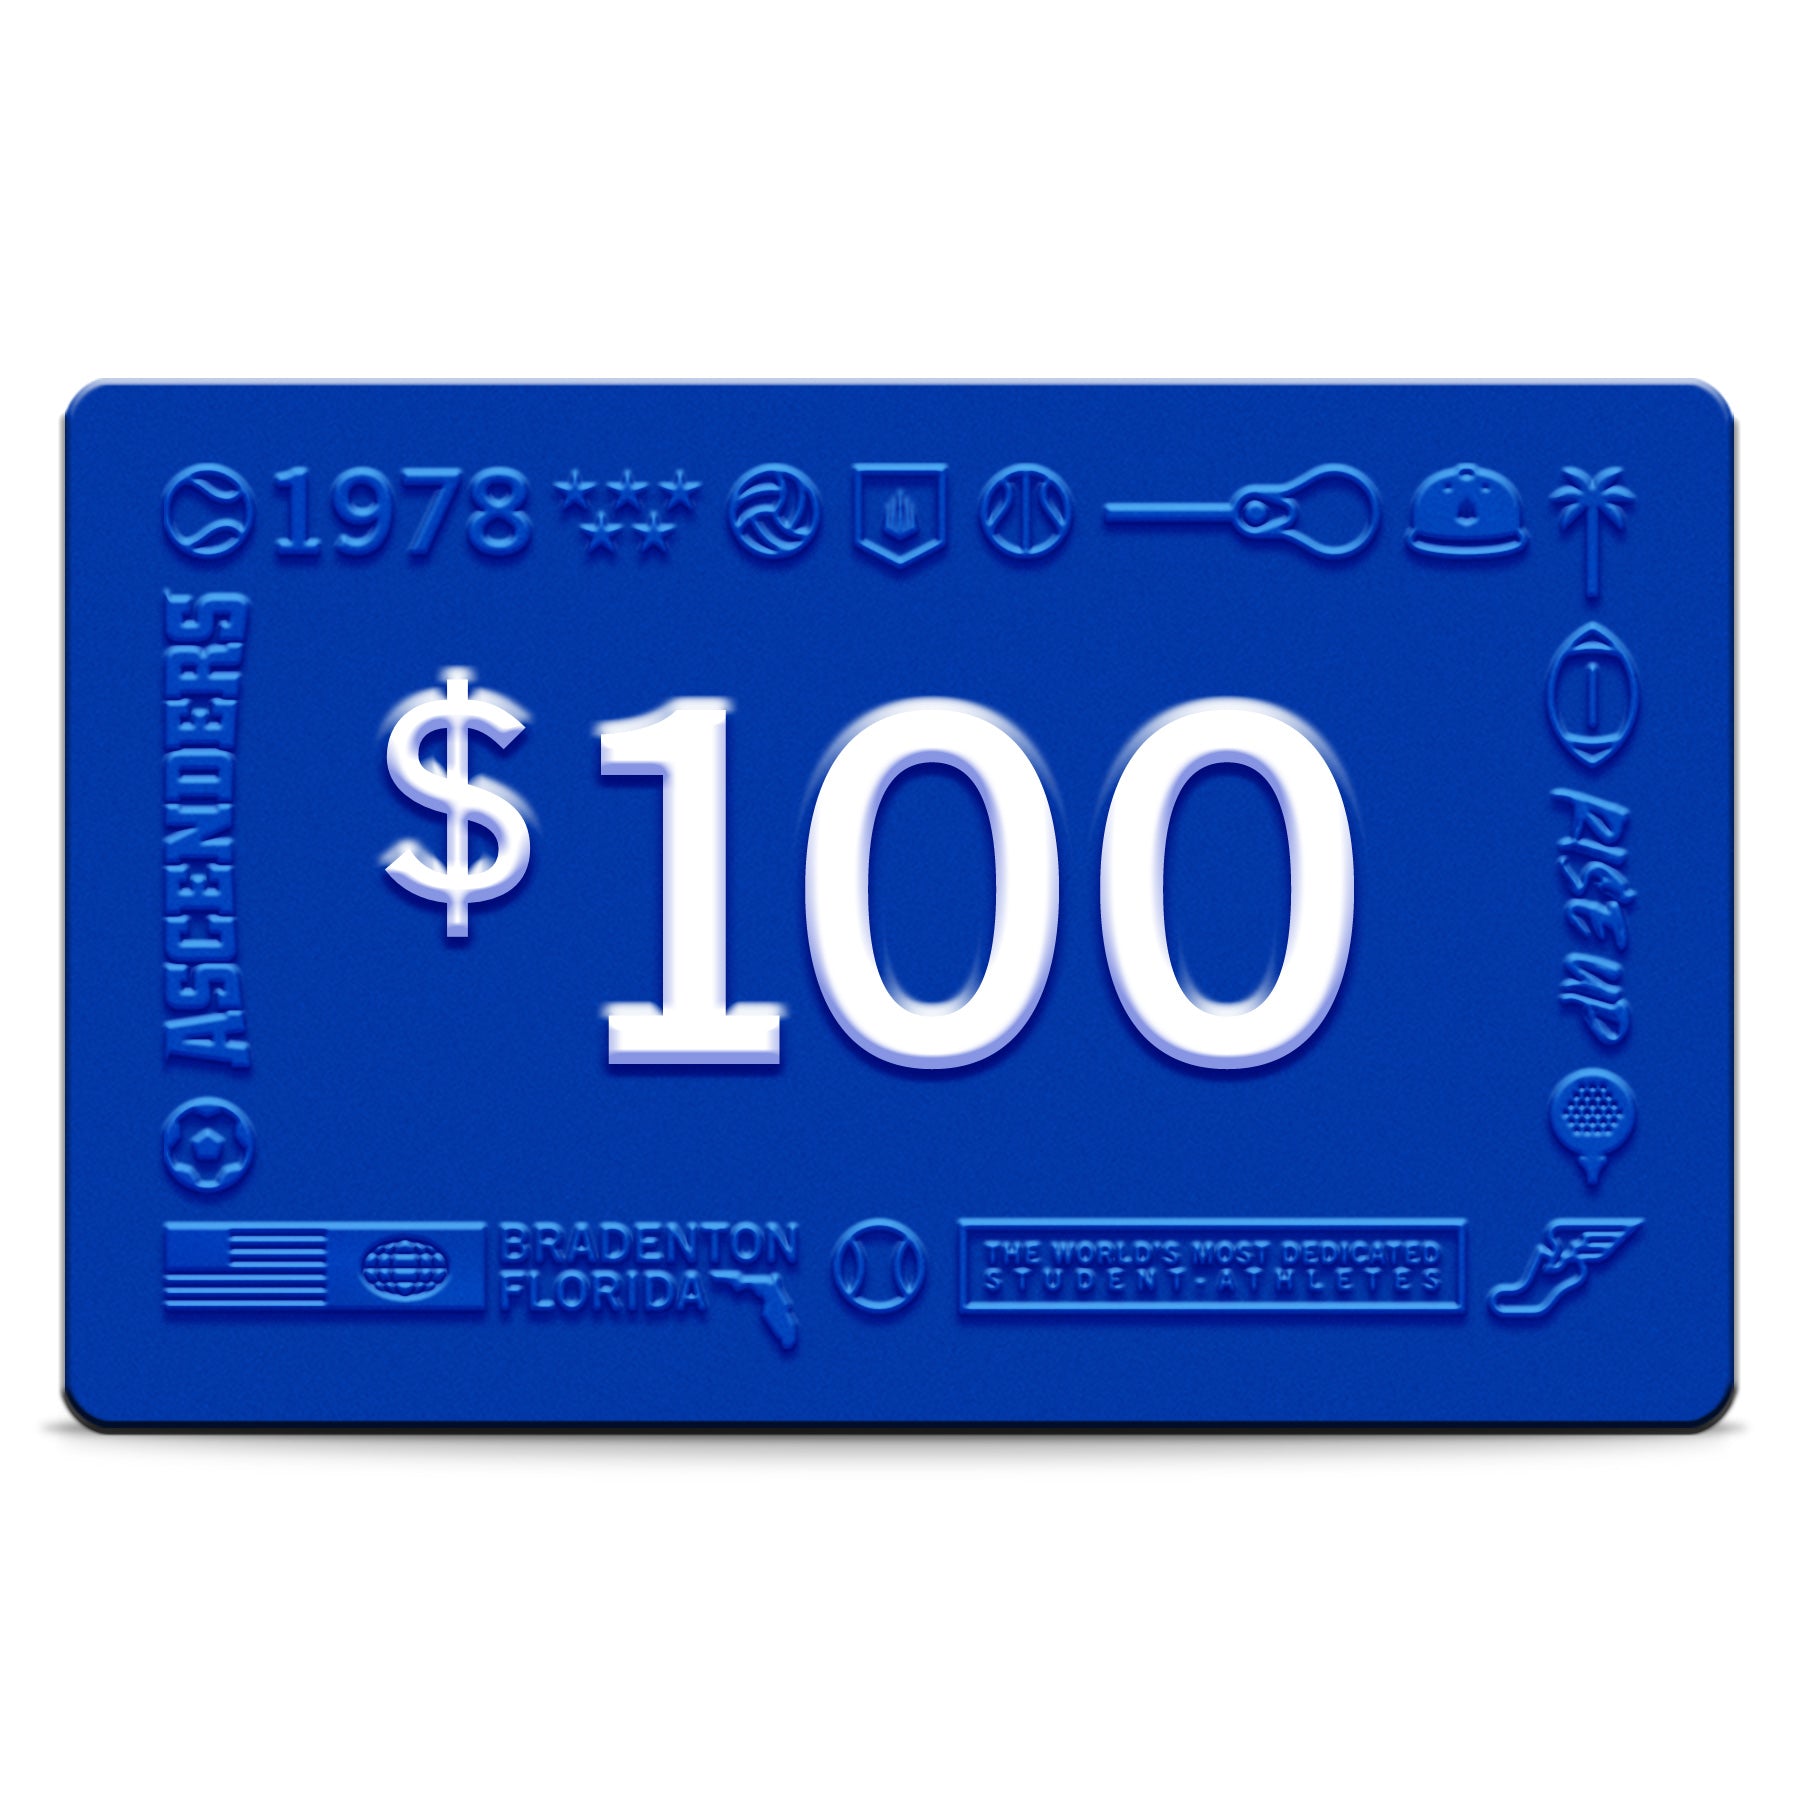 $100 Event Certificate